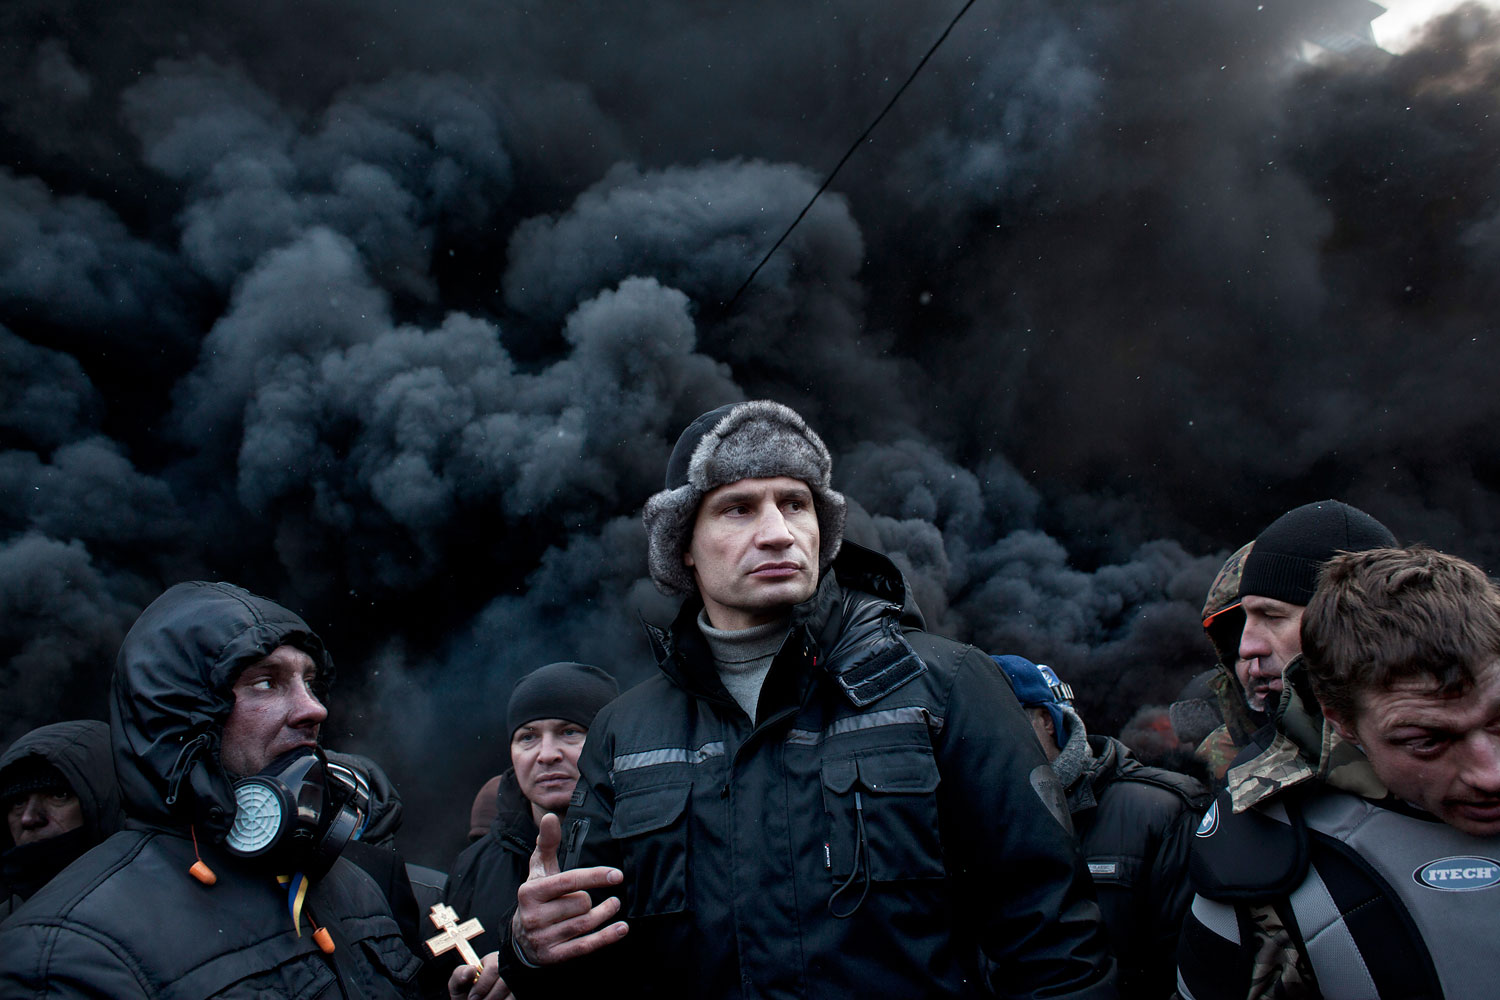 Vitali Klitschko , an opposition leader, visits the barricade on Hrushevskoho street in the morning to adress protesters on January 23, 2014 in Kiev, Ukraine. (Etienne De Malglaive—Getty Images)